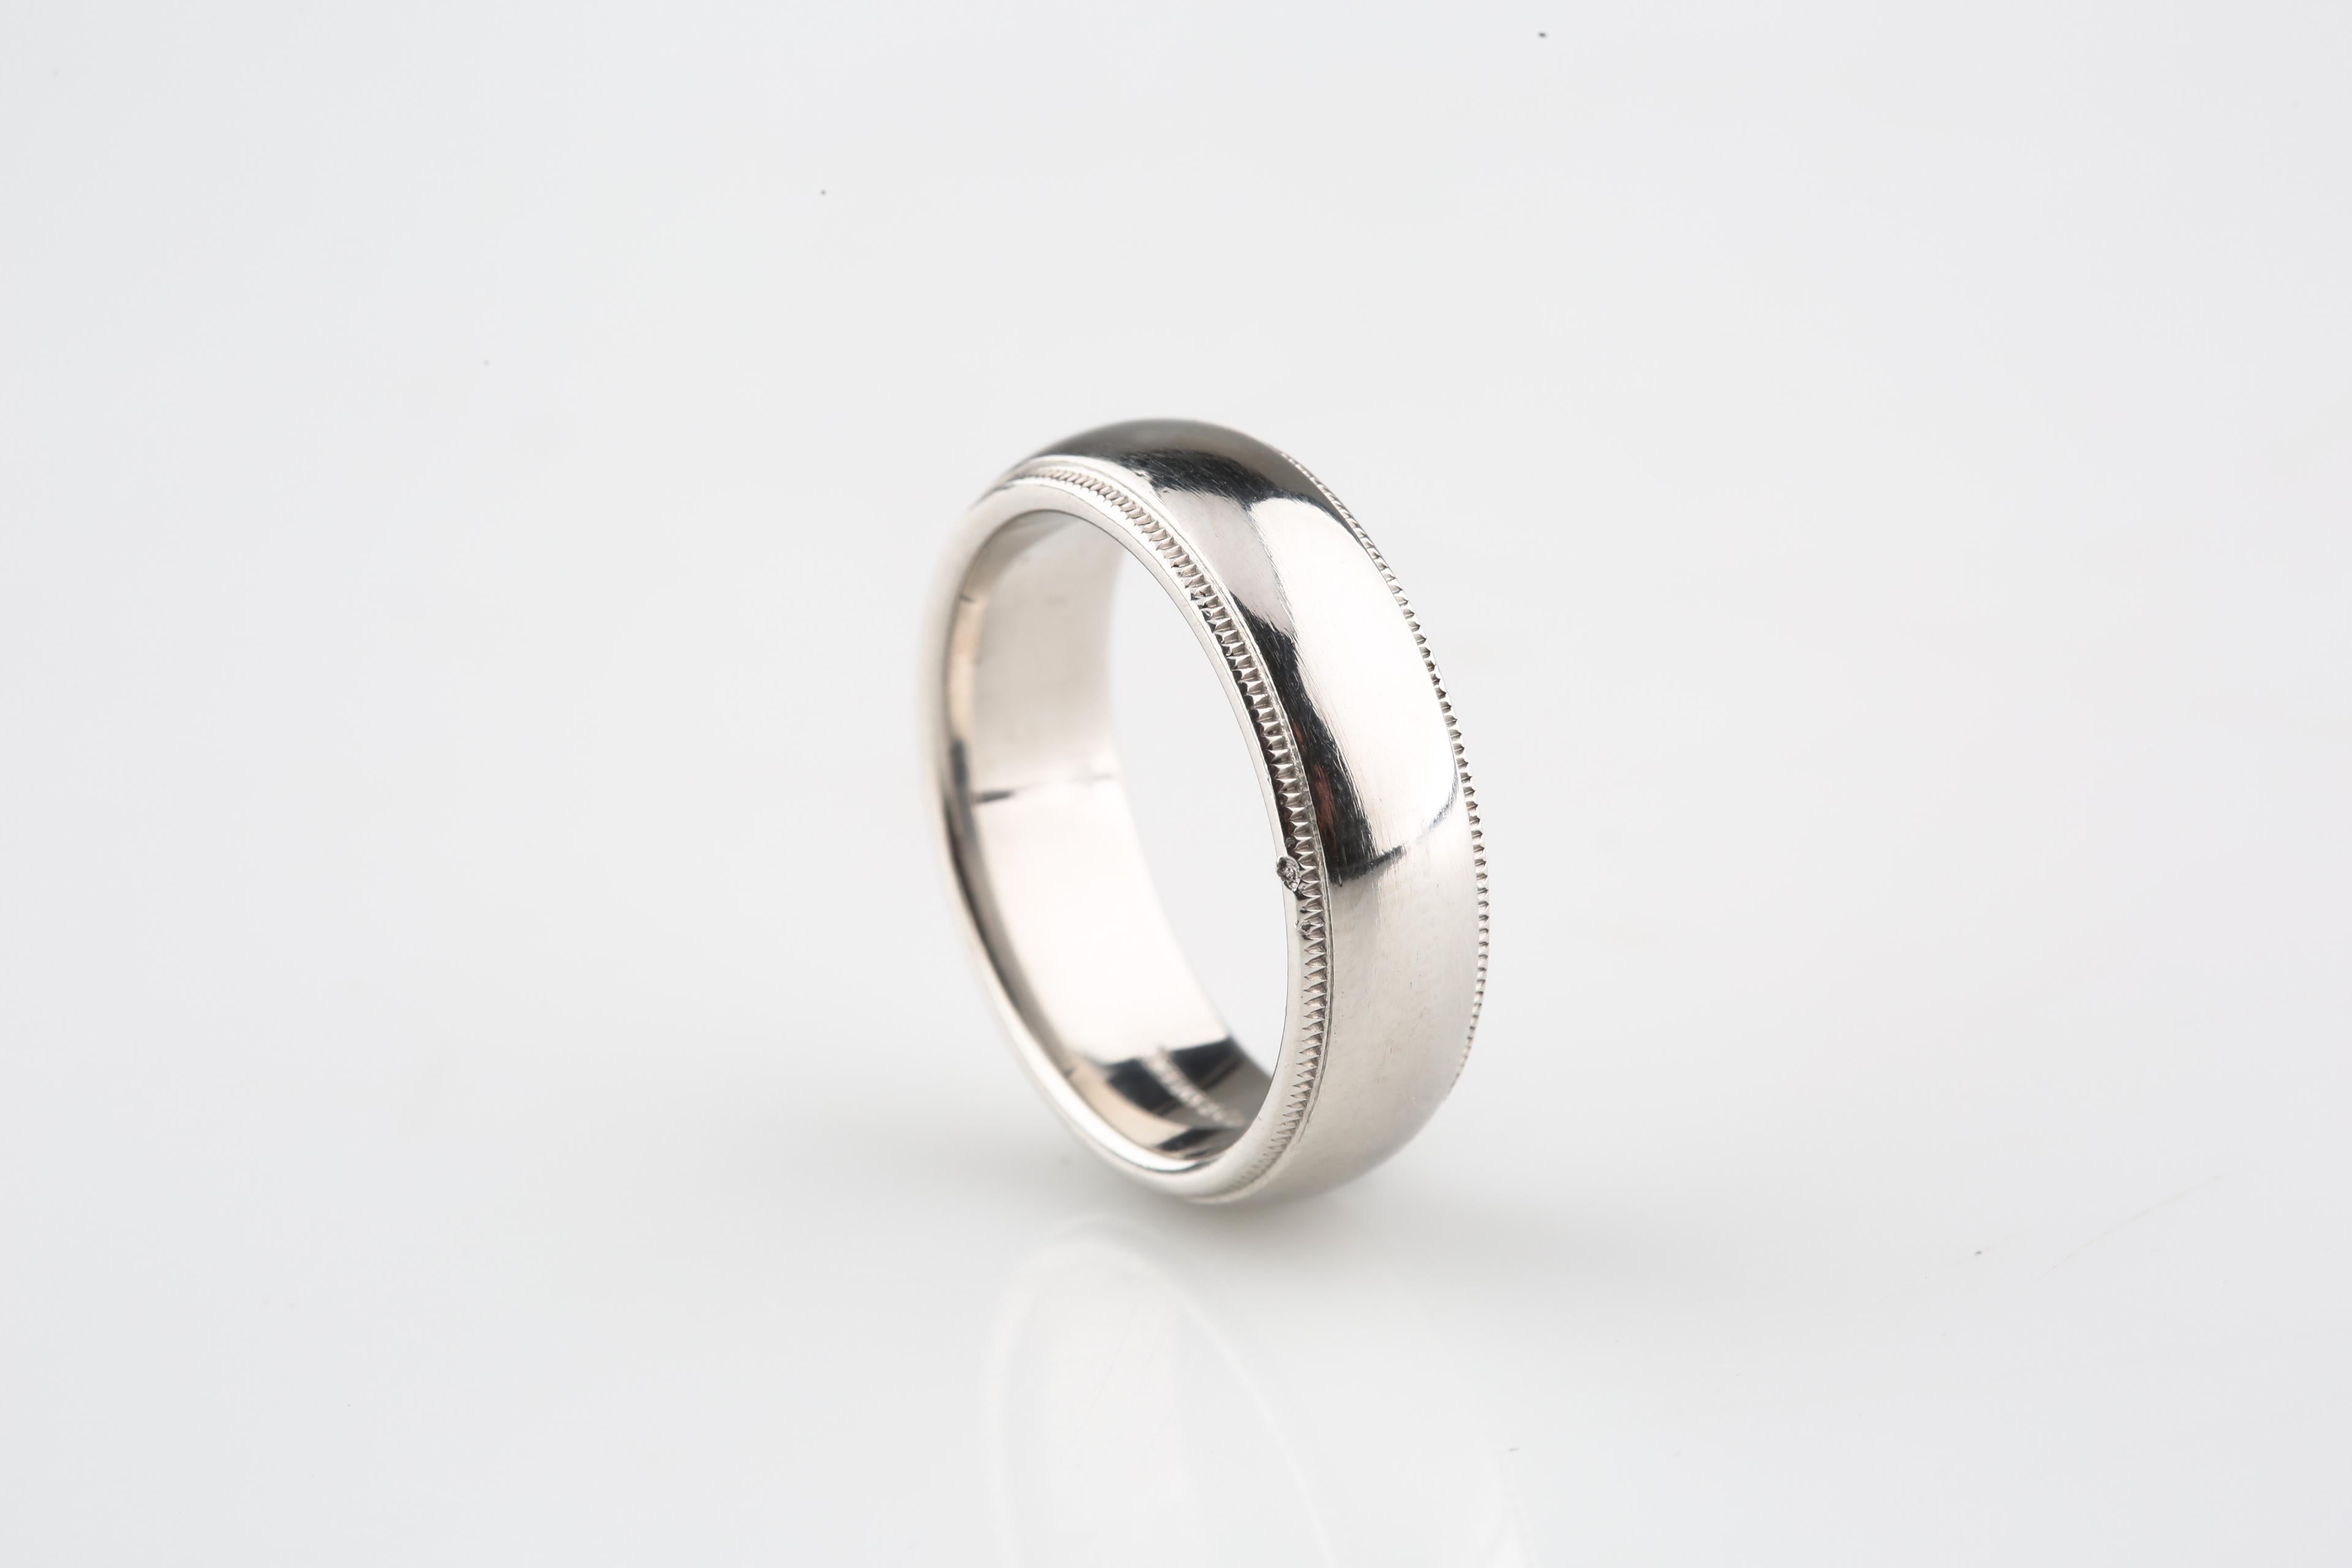 Authentic Tiffany & Co. wedding band, 6mm
Design: milgrain 
Metal: Platinum
Hallmarks: 